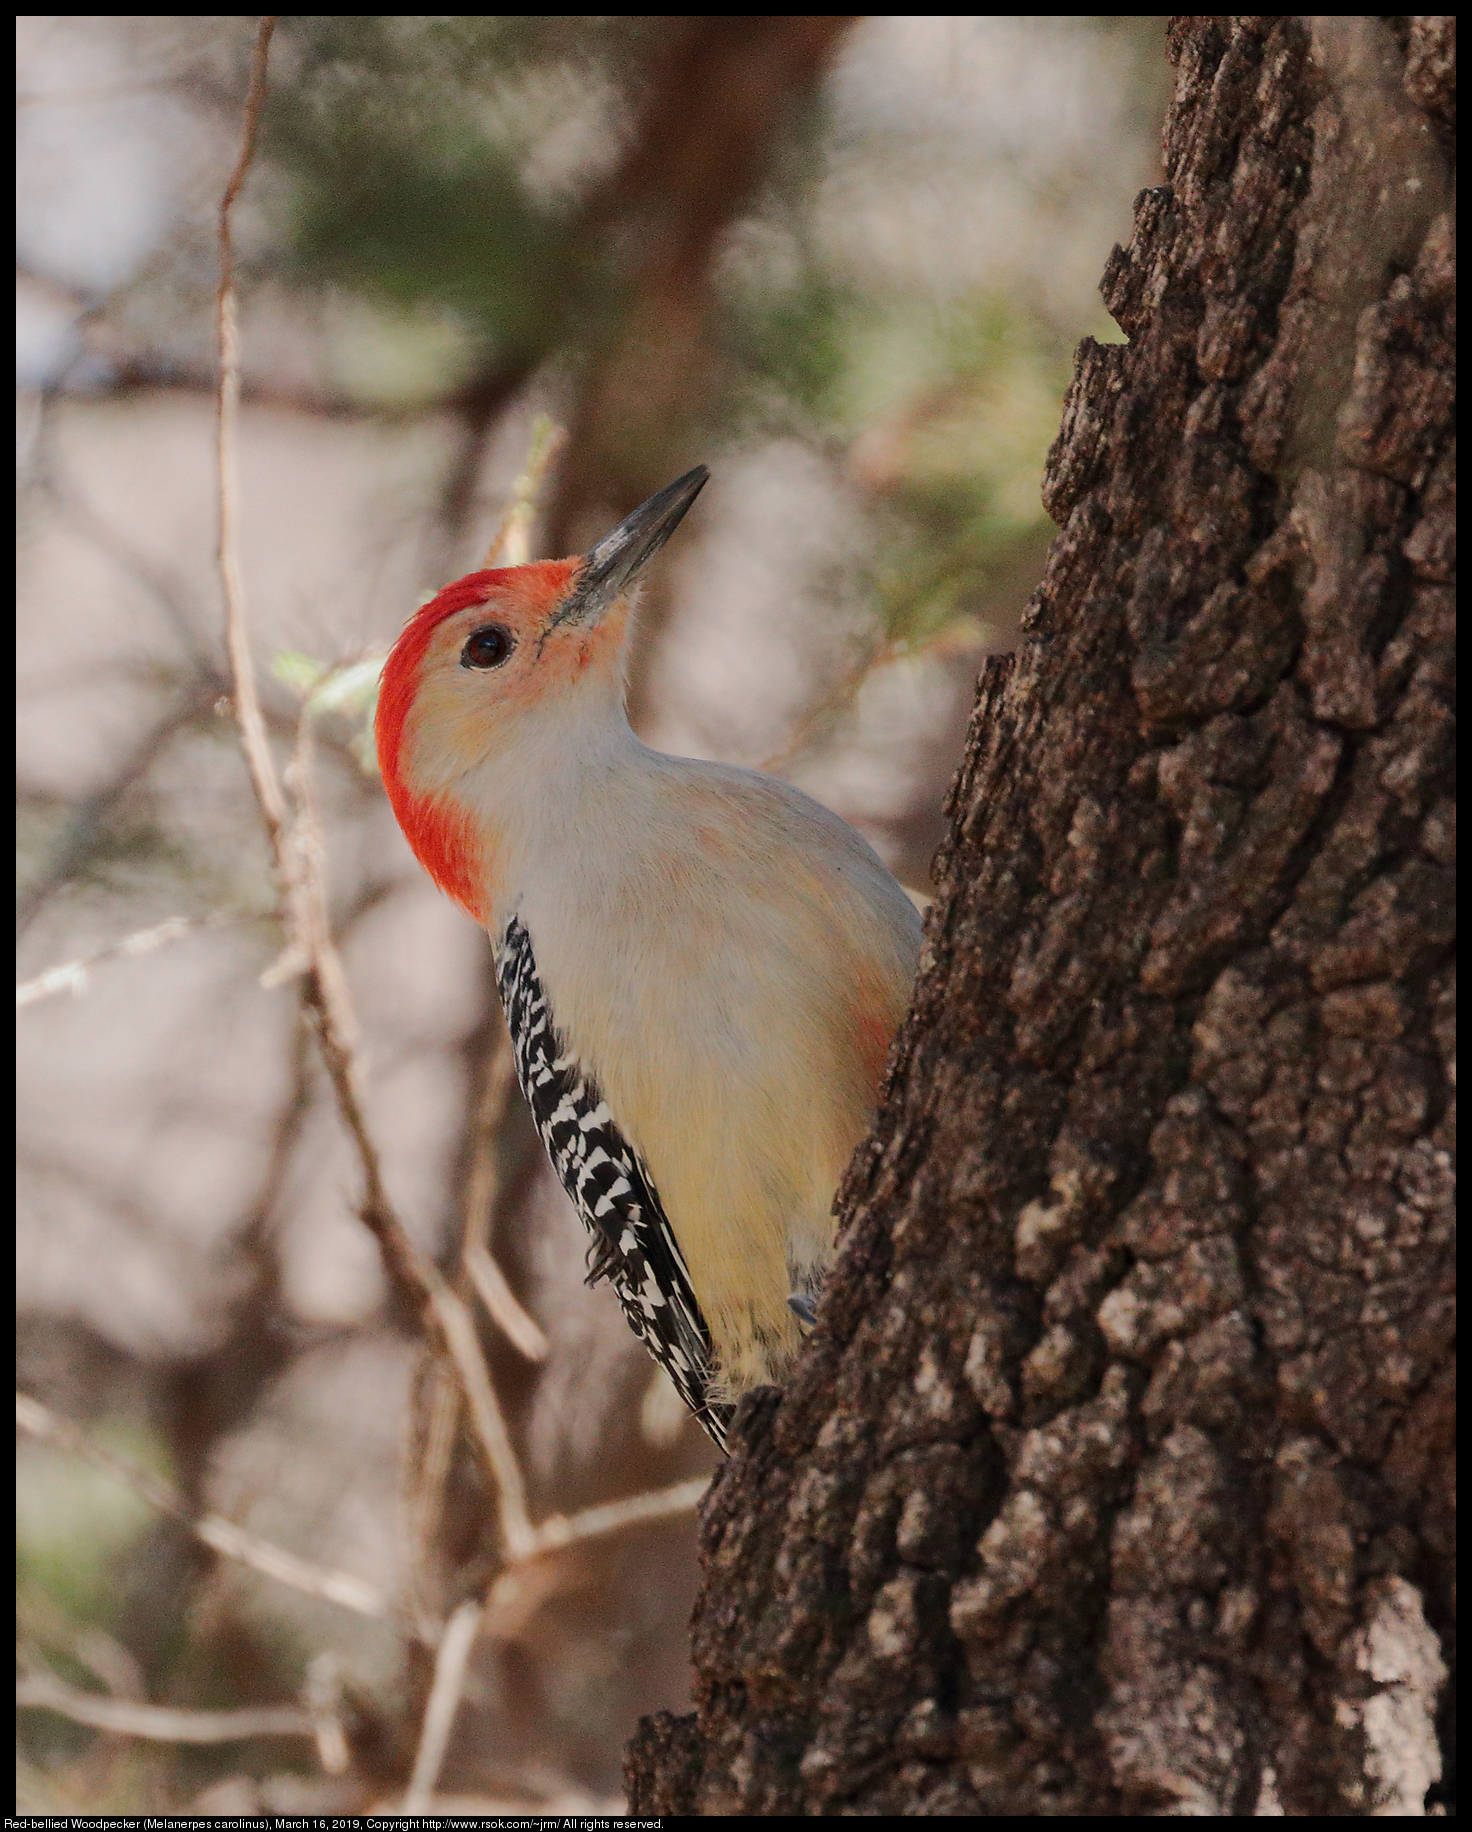 Red-bellied Woodpecker (Melanerpes carolinus), March 16, 2019